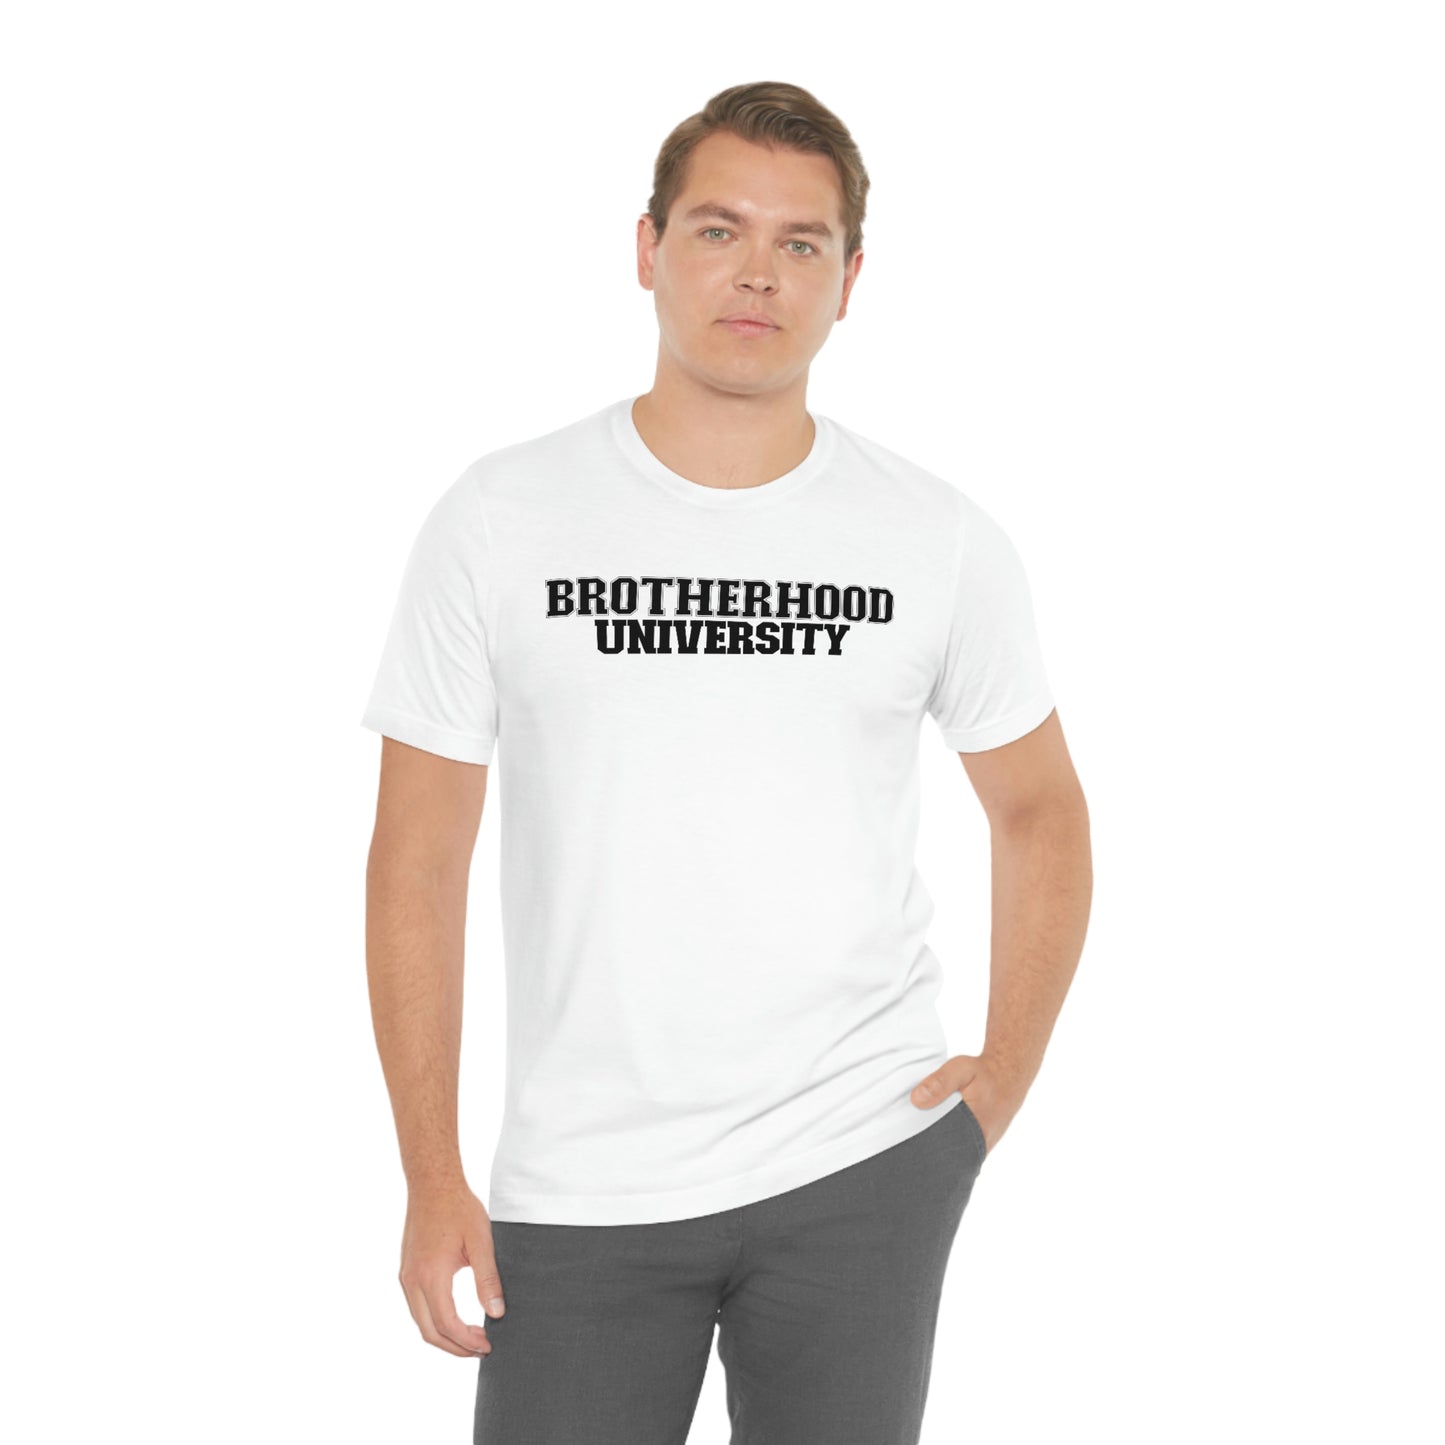 Brotherhood University tee